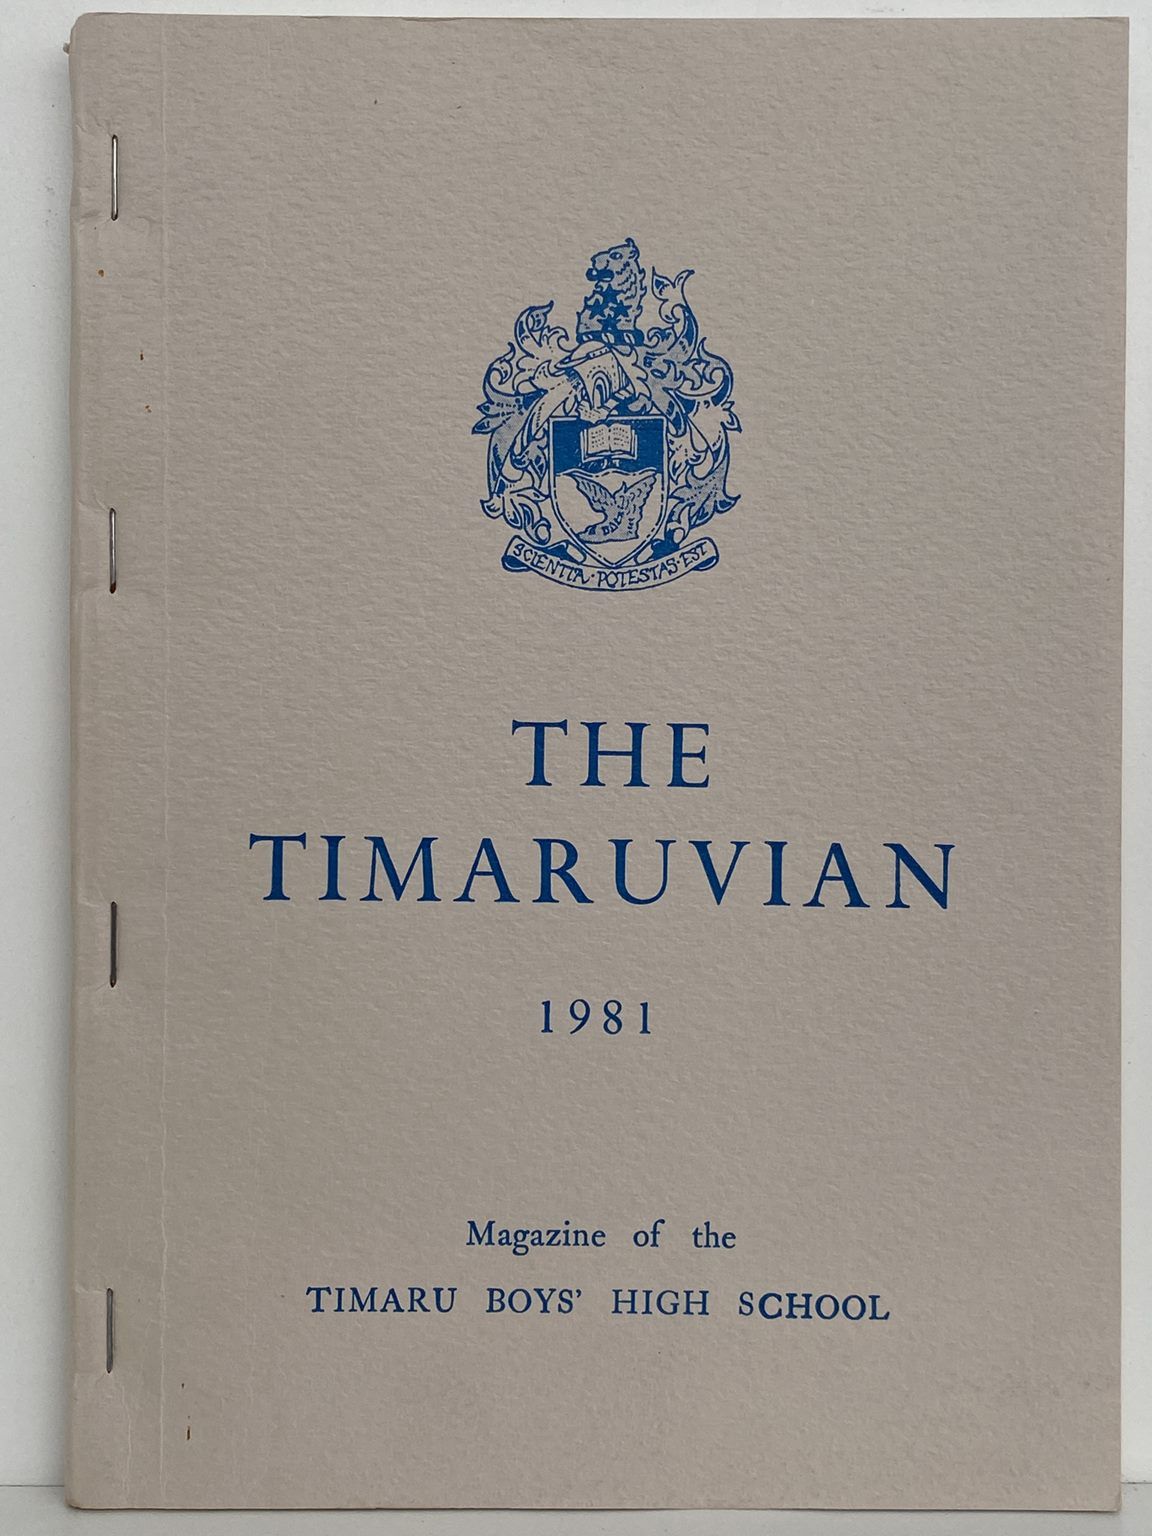 THE TIMARUVIAN: Magazine of the Timaru Boys' High School 1981